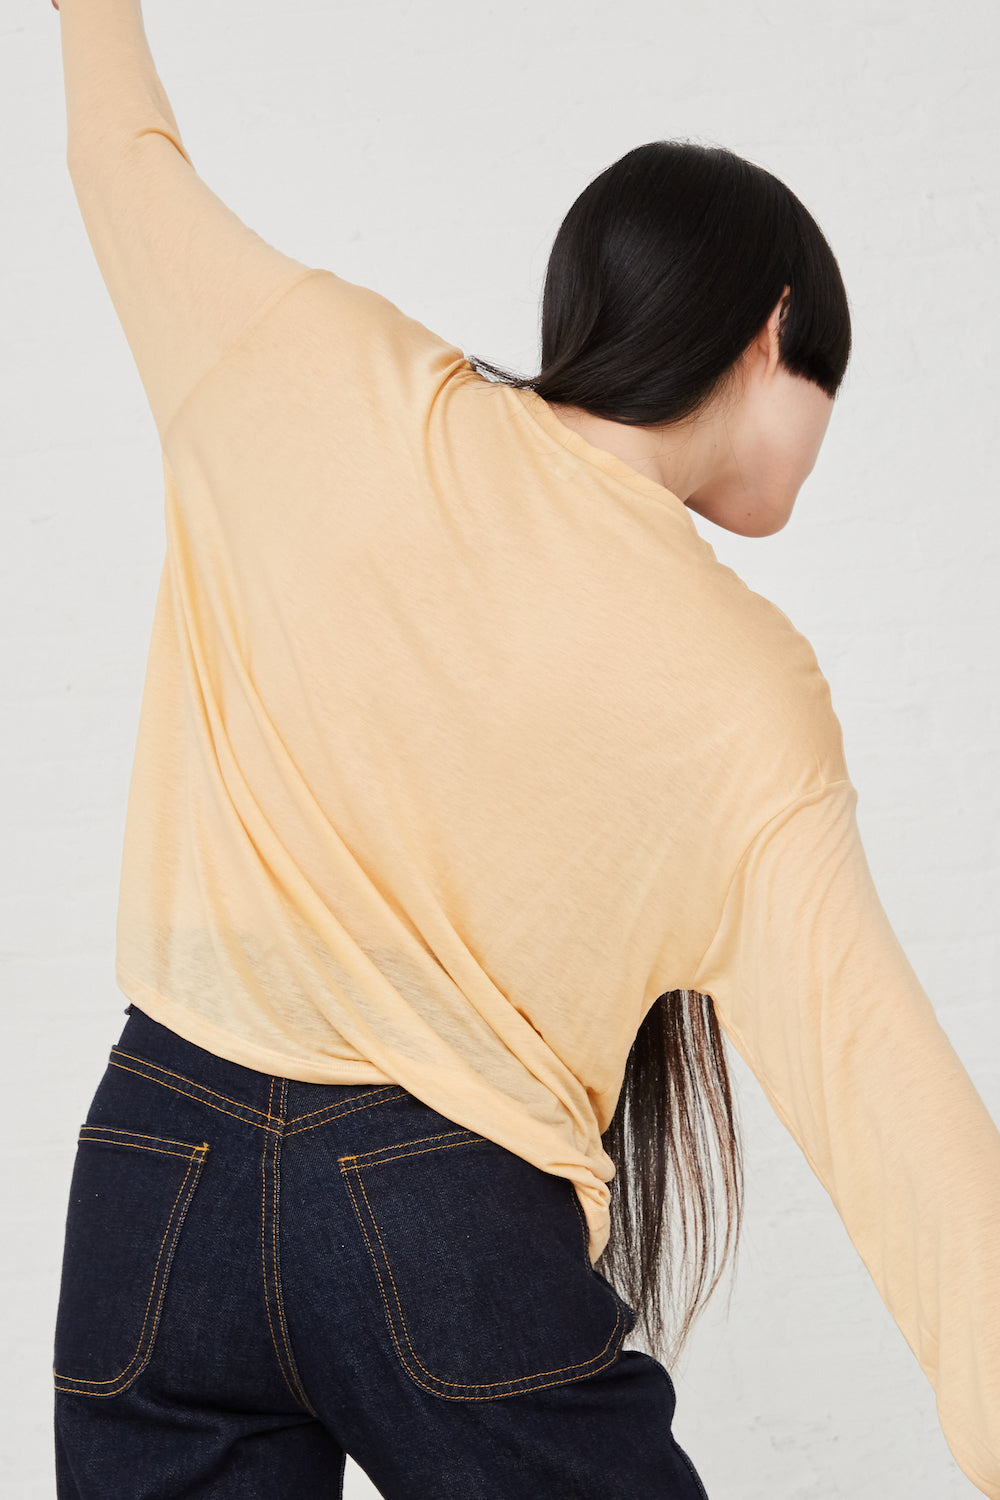 Baserange - Loose Long Sleeve Tee in Daf Yellow back view on model.